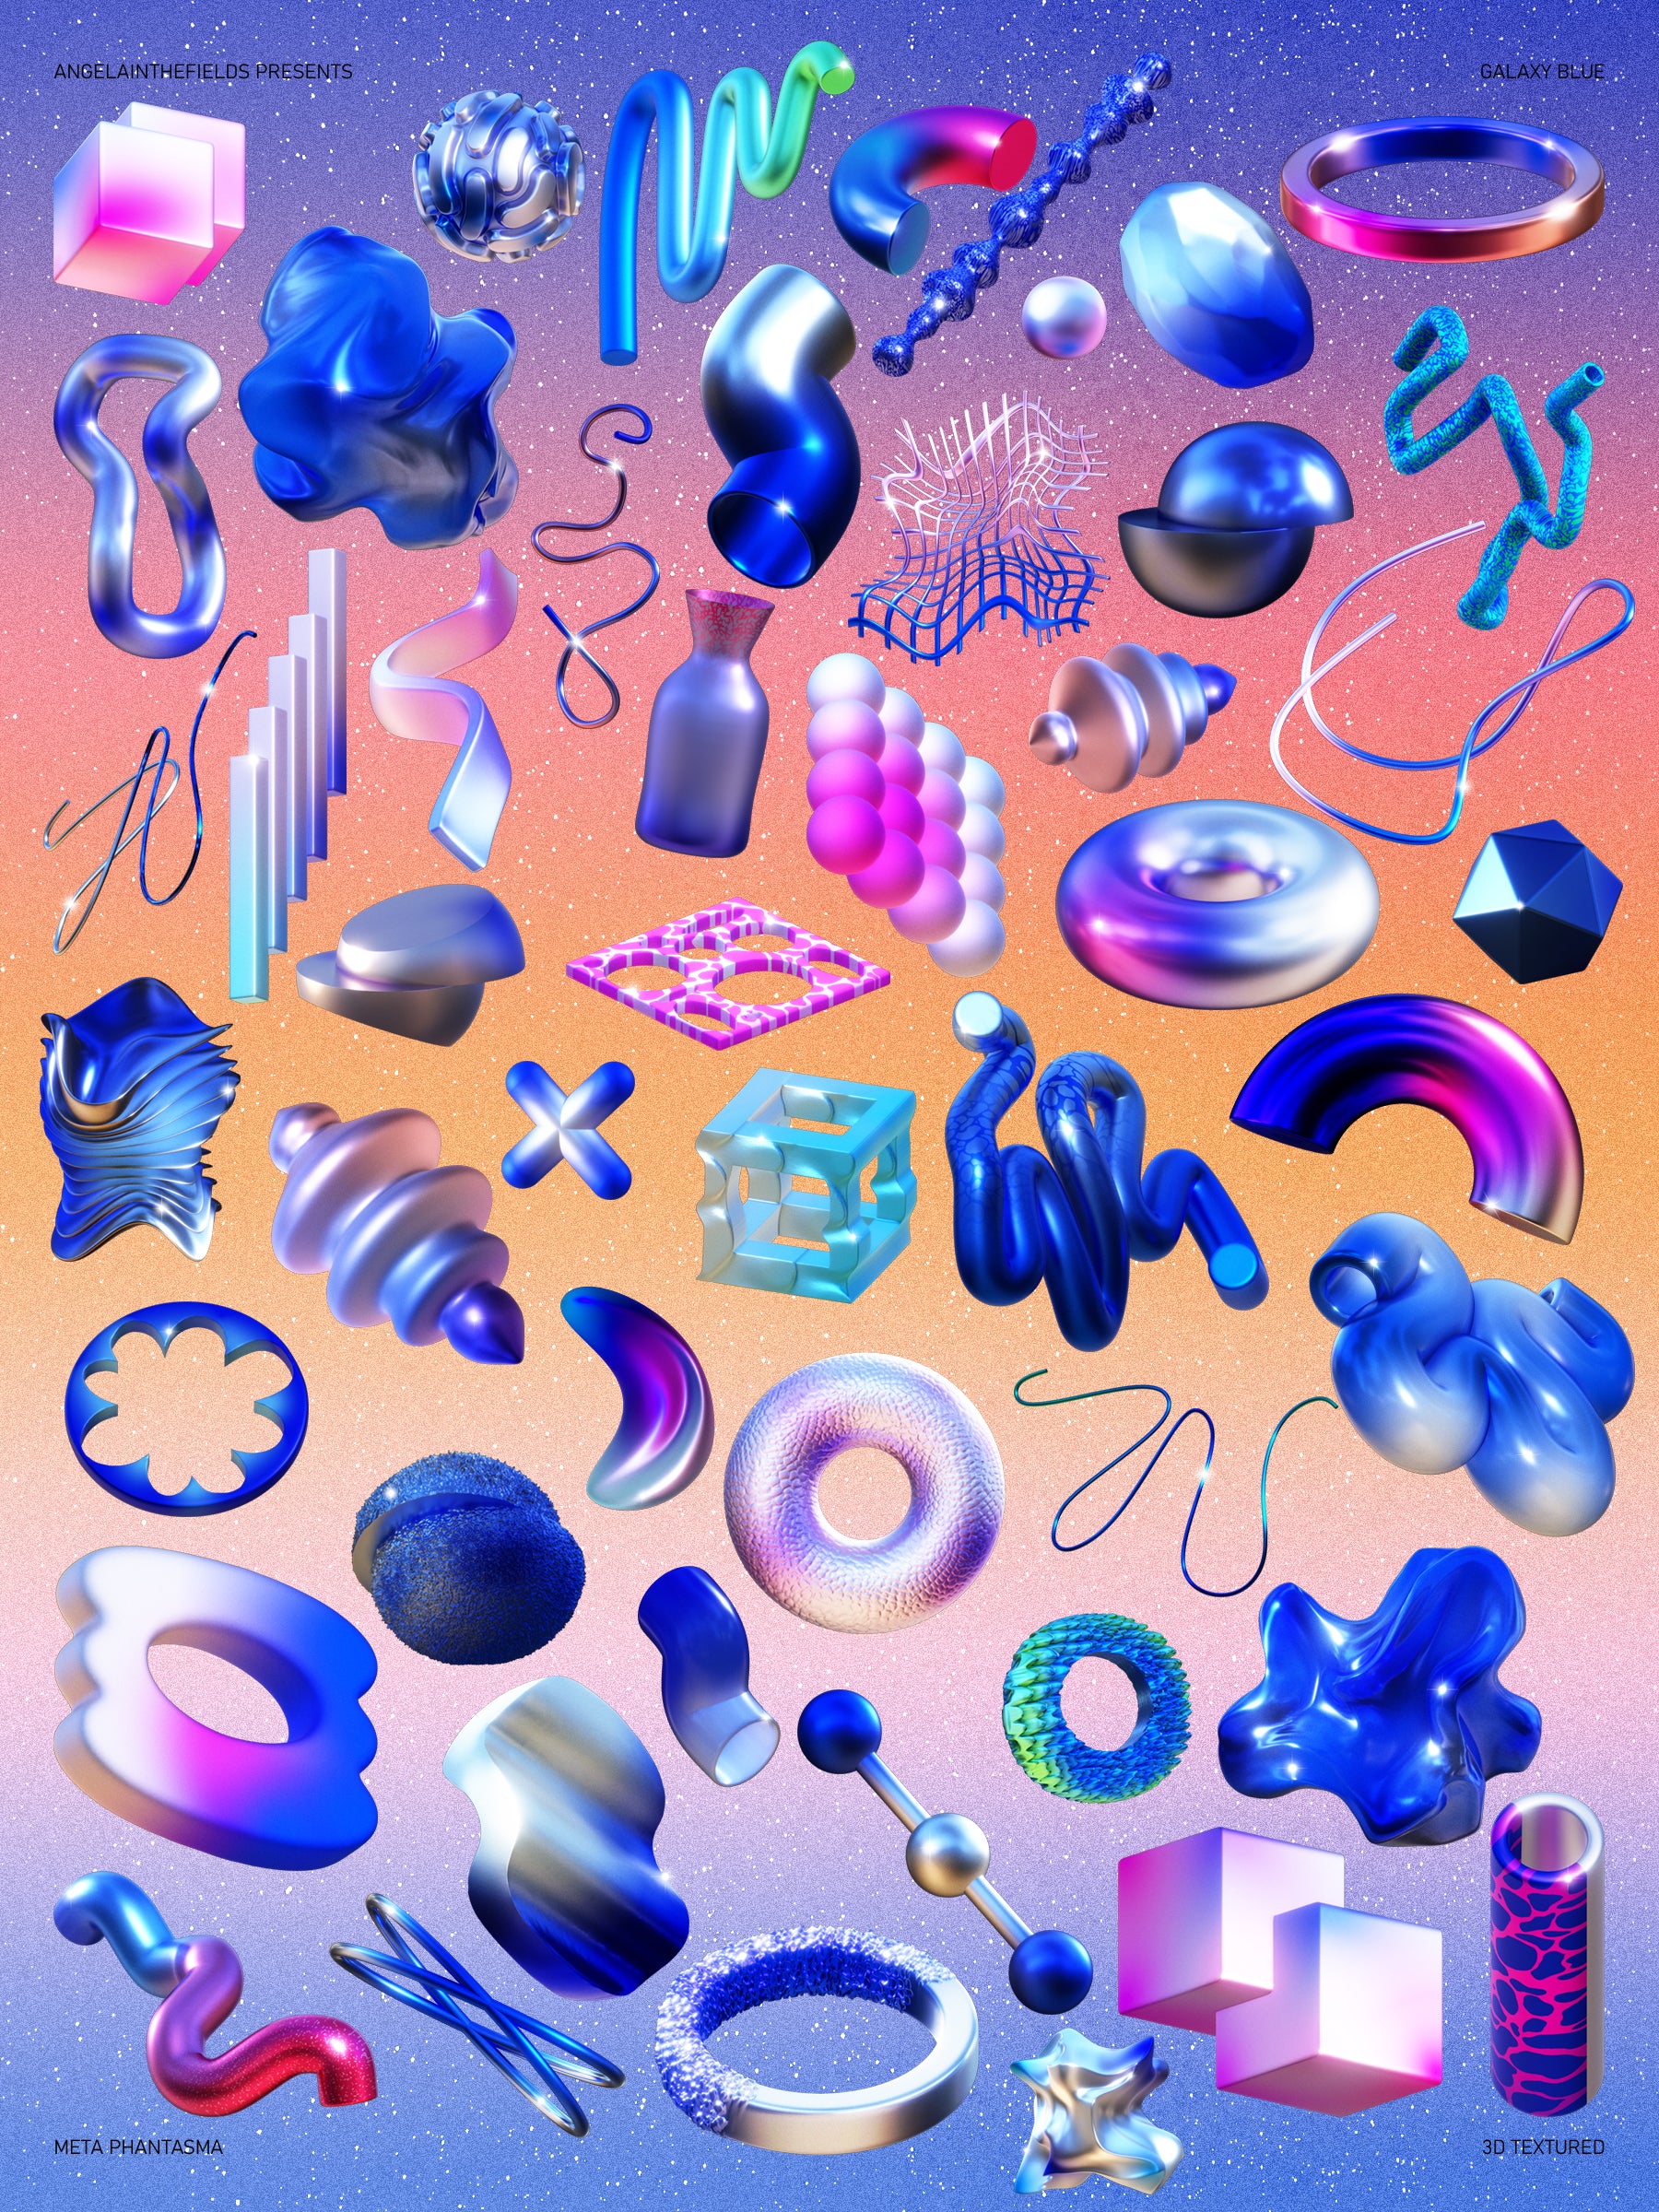 3D GALAXY BLUE Objects